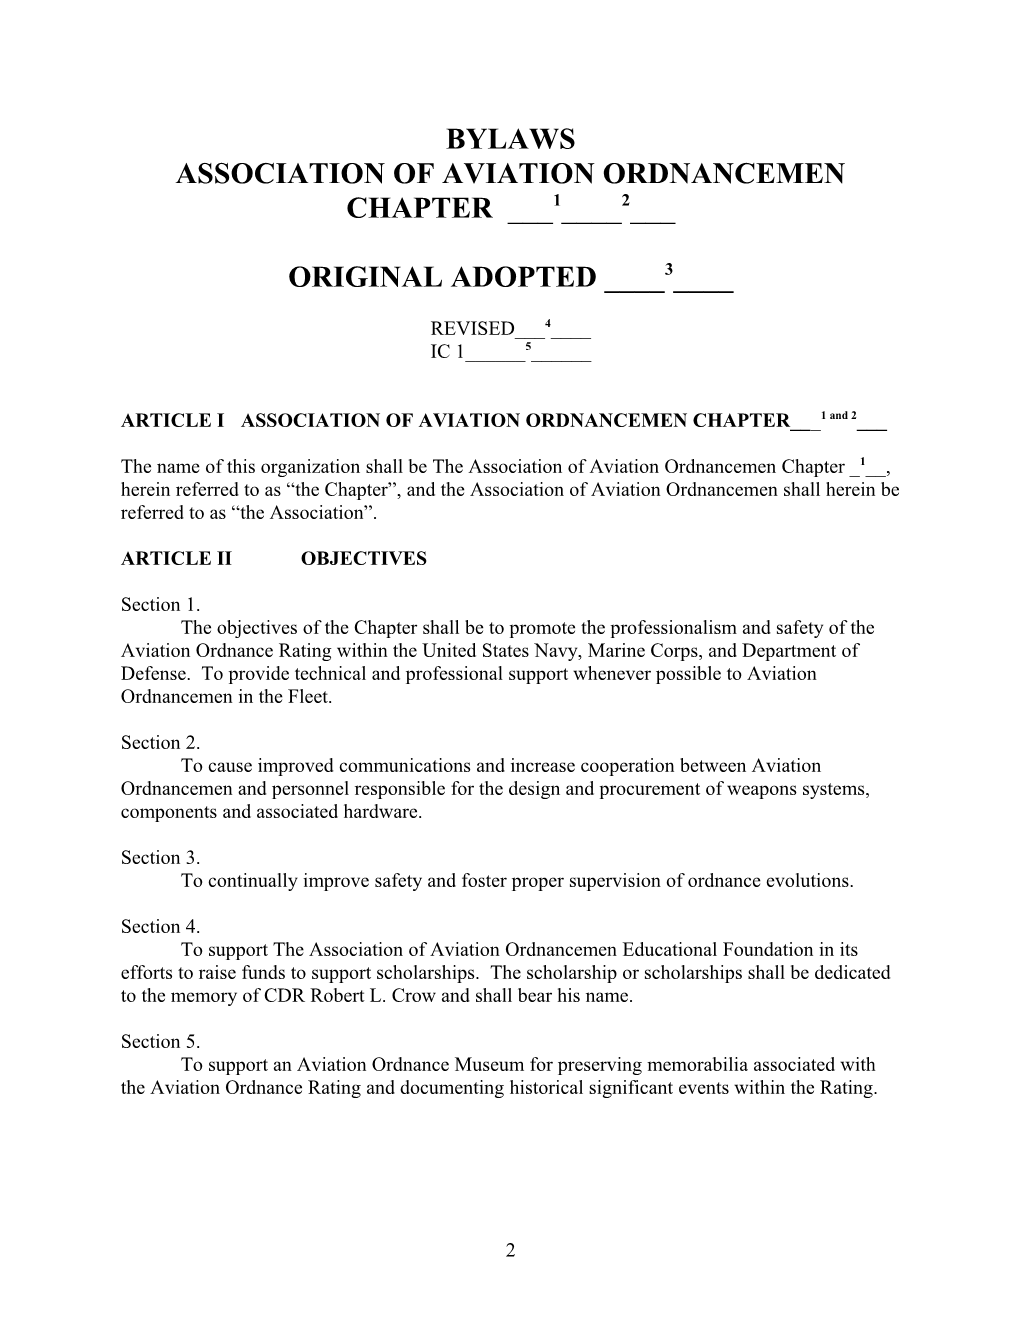 The Association of Aviation Ordnancemen